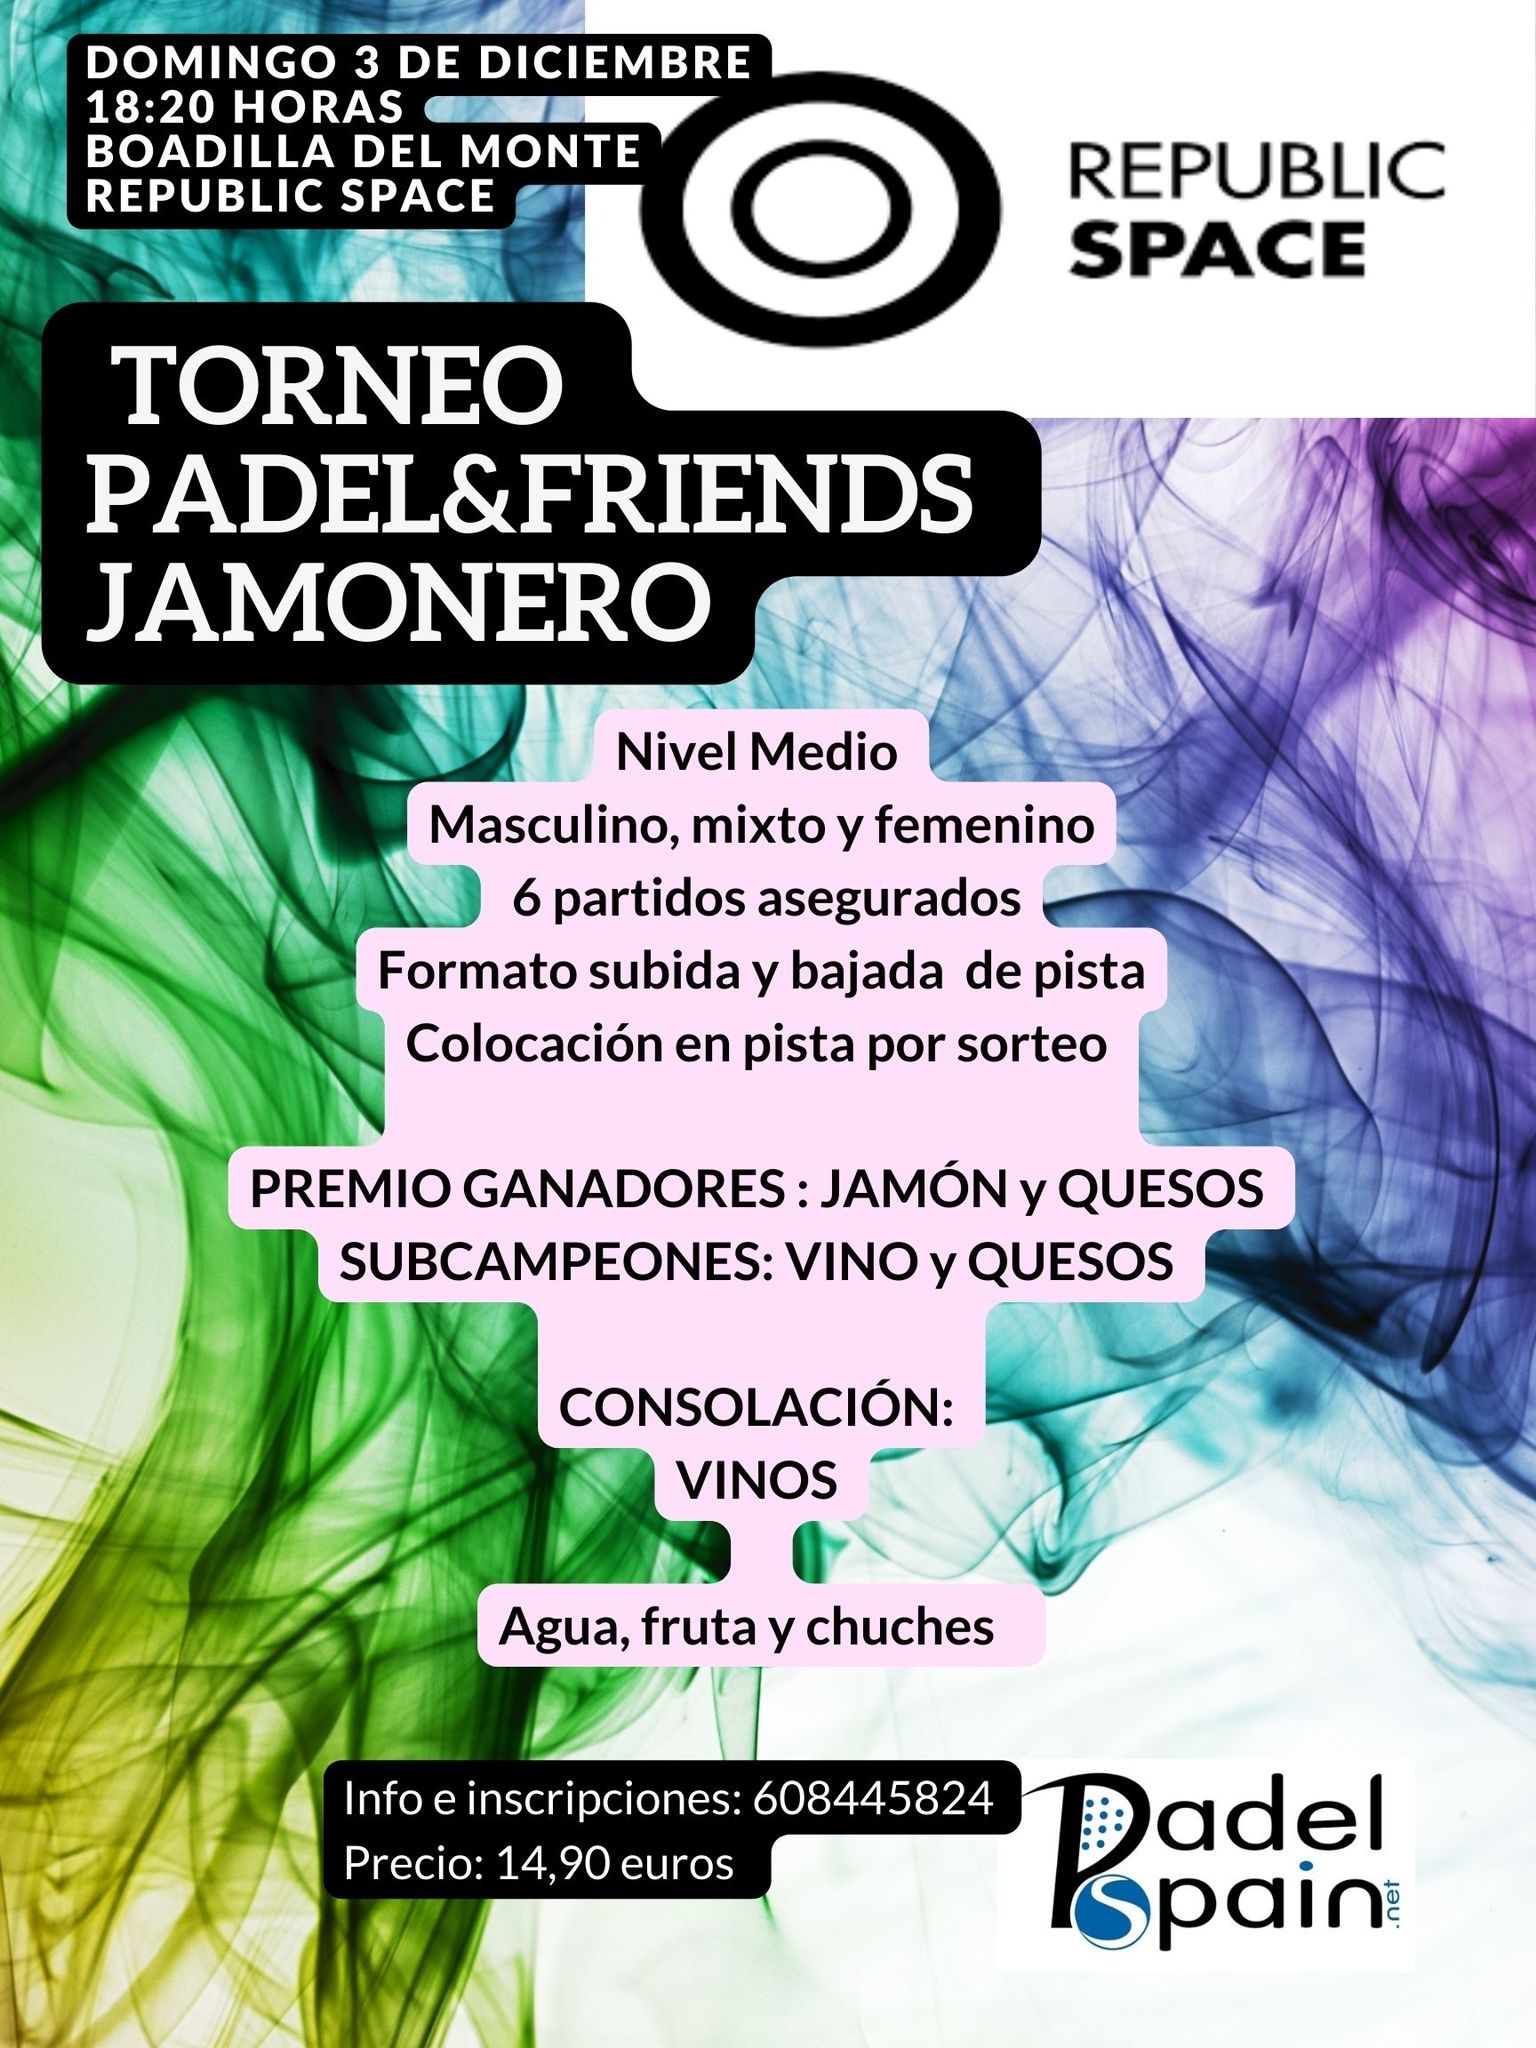 Torneo jamonero Padel and friends Republic Space